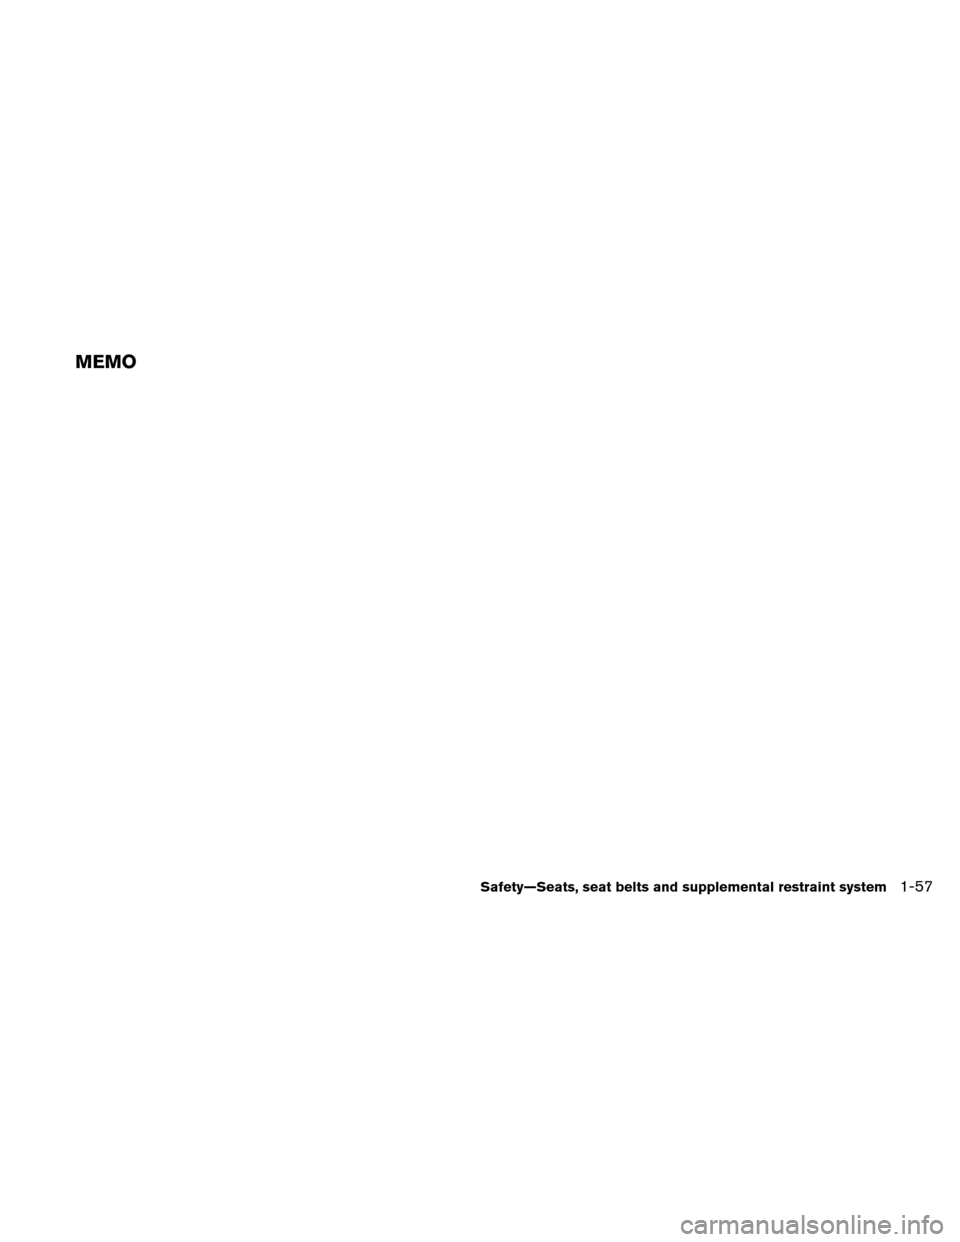 NISSAN VERSA HATCHBACK 2011 1.G Manual PDF MEMO
Safety—Seats, seat belts and supplemental restraint system1-57 